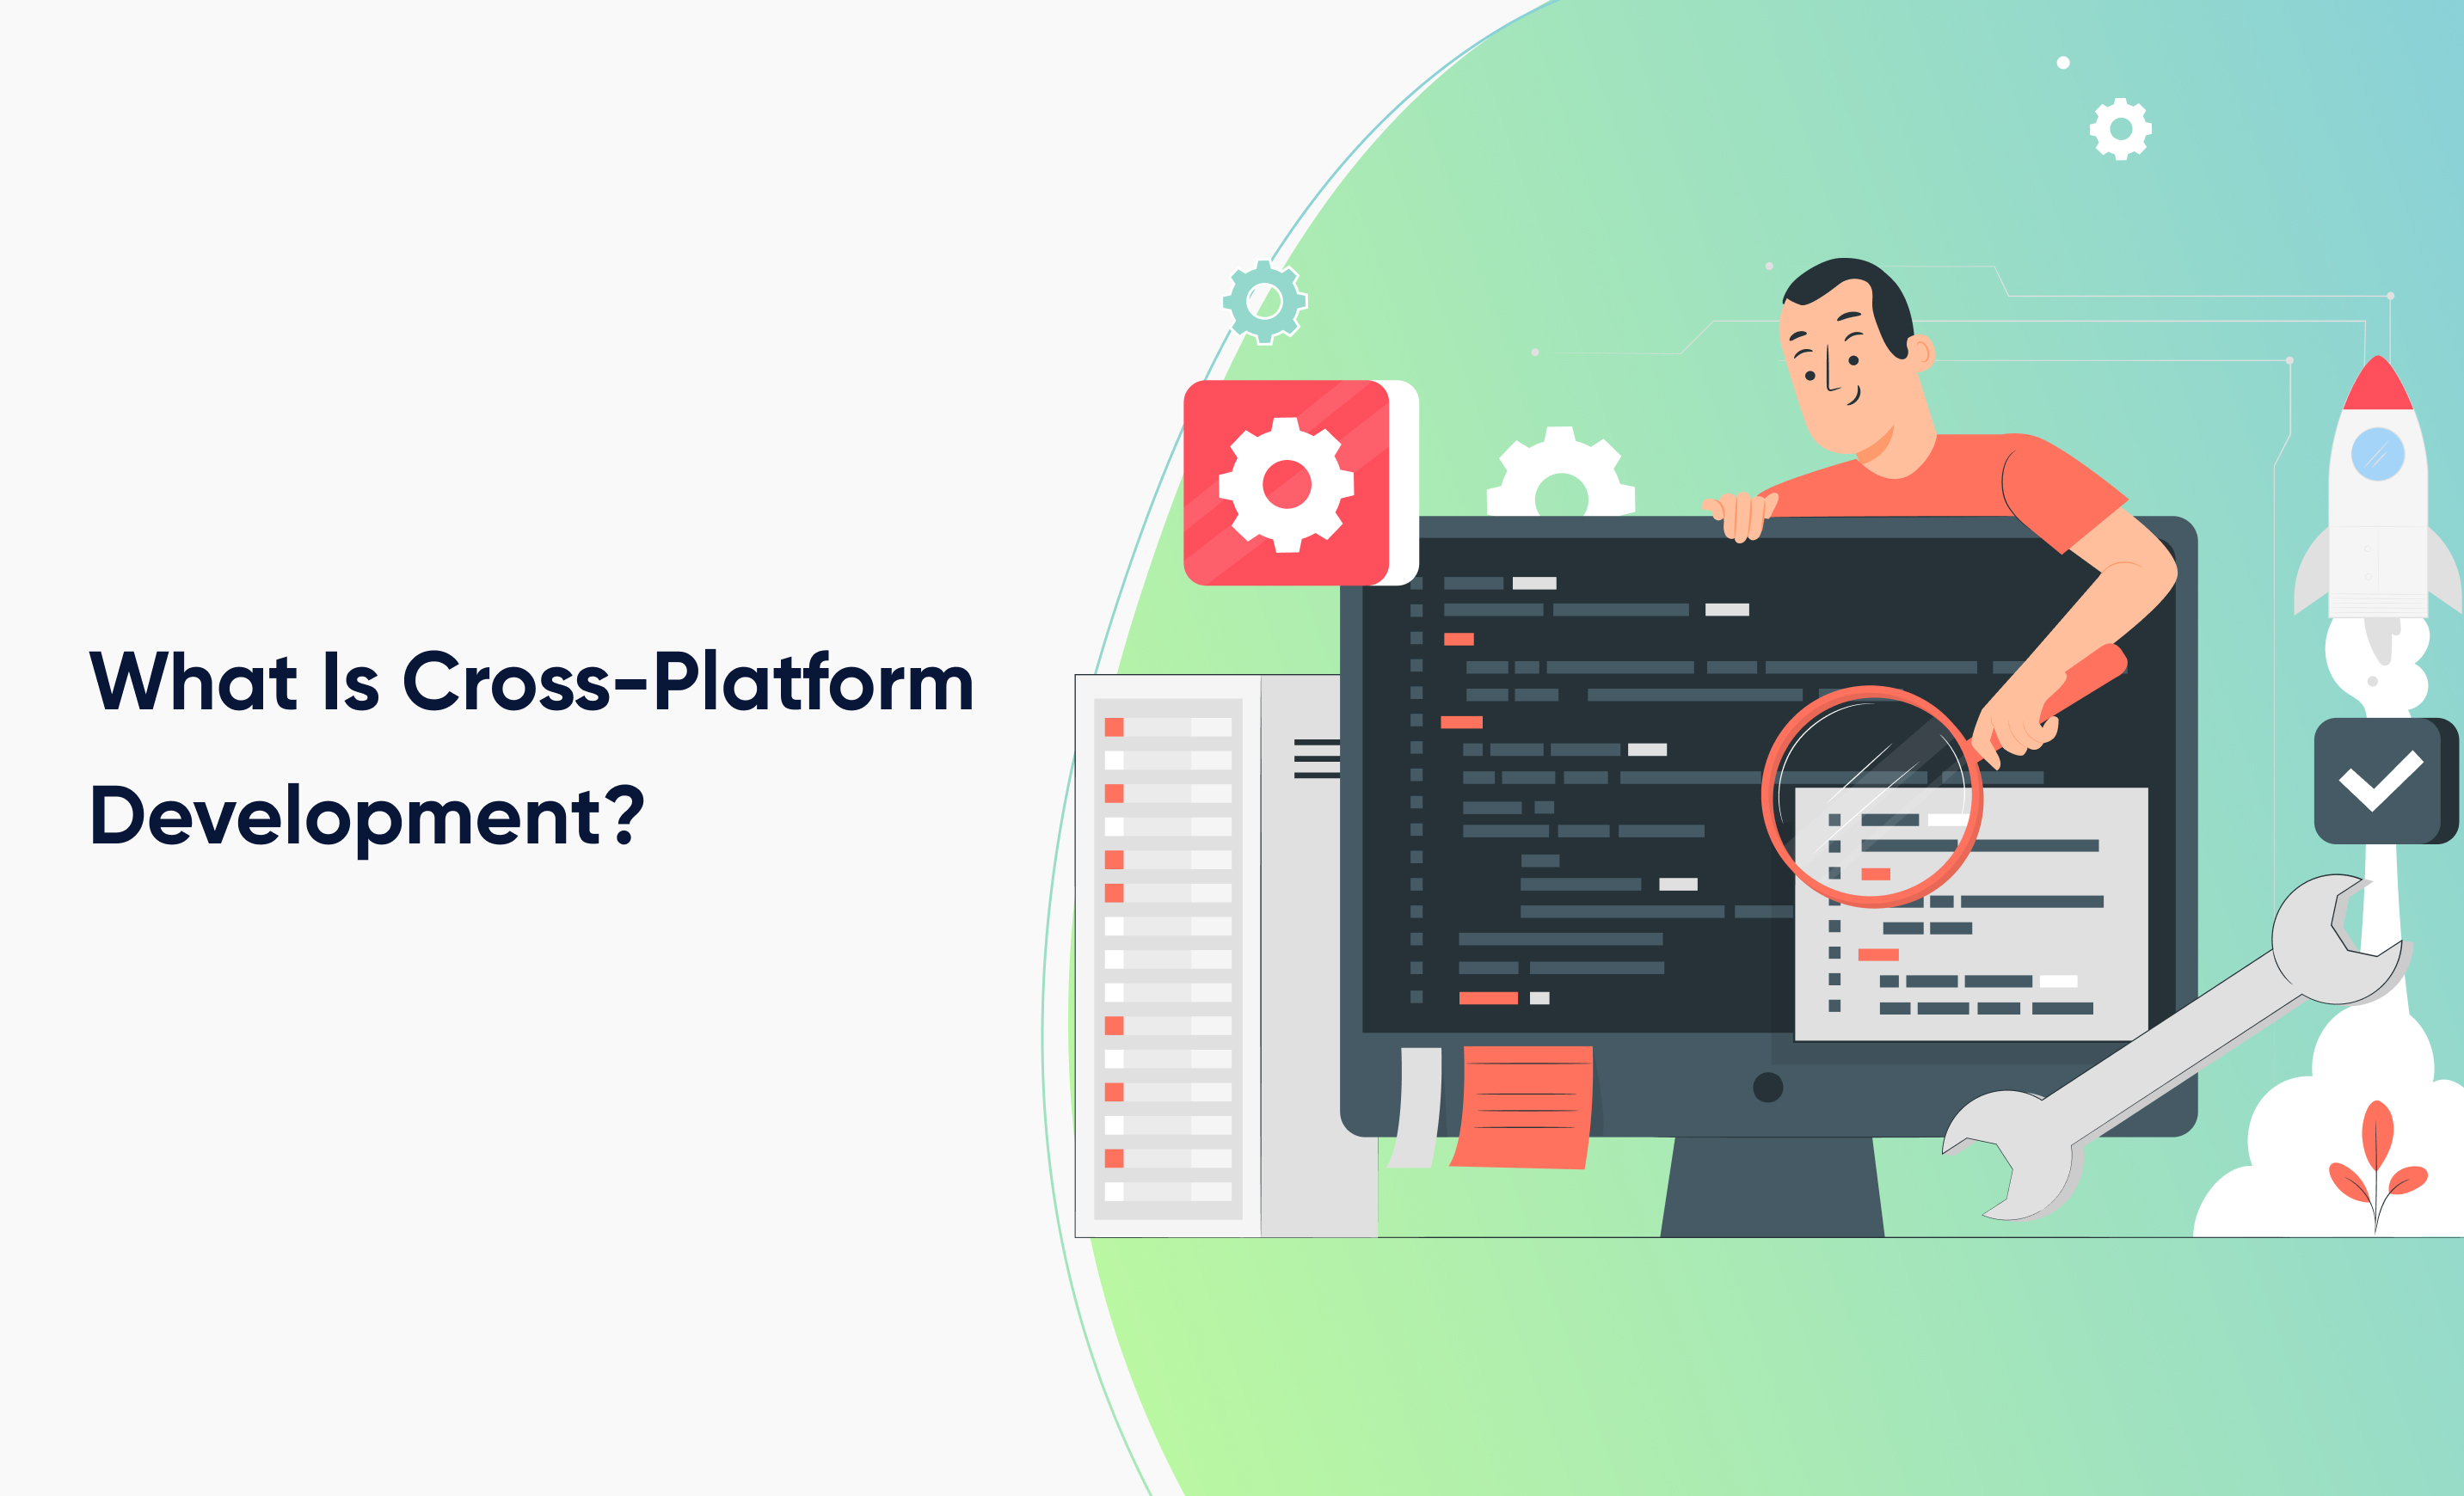 What Is Cross-Platform Development?